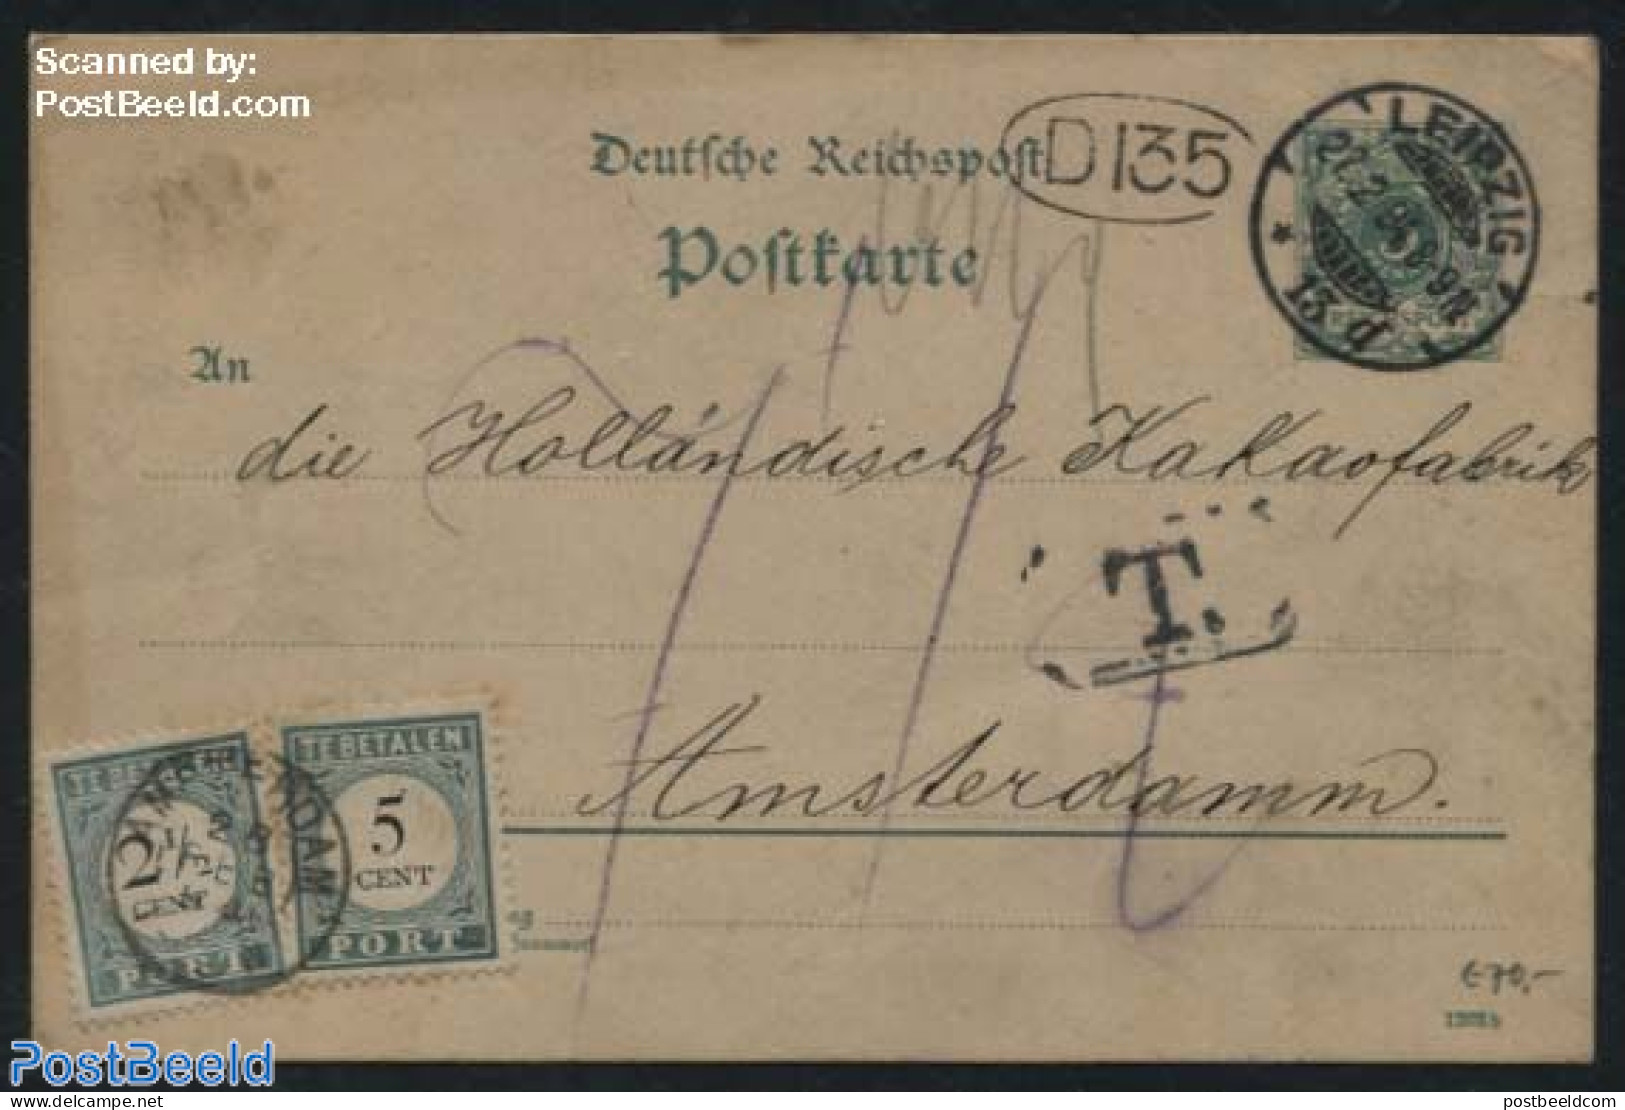 Netherlands 1894 Postcard From Leipzig To Amsterdam, Dutch Postage Due 7.5c, Postal History - Brieven En Documenten